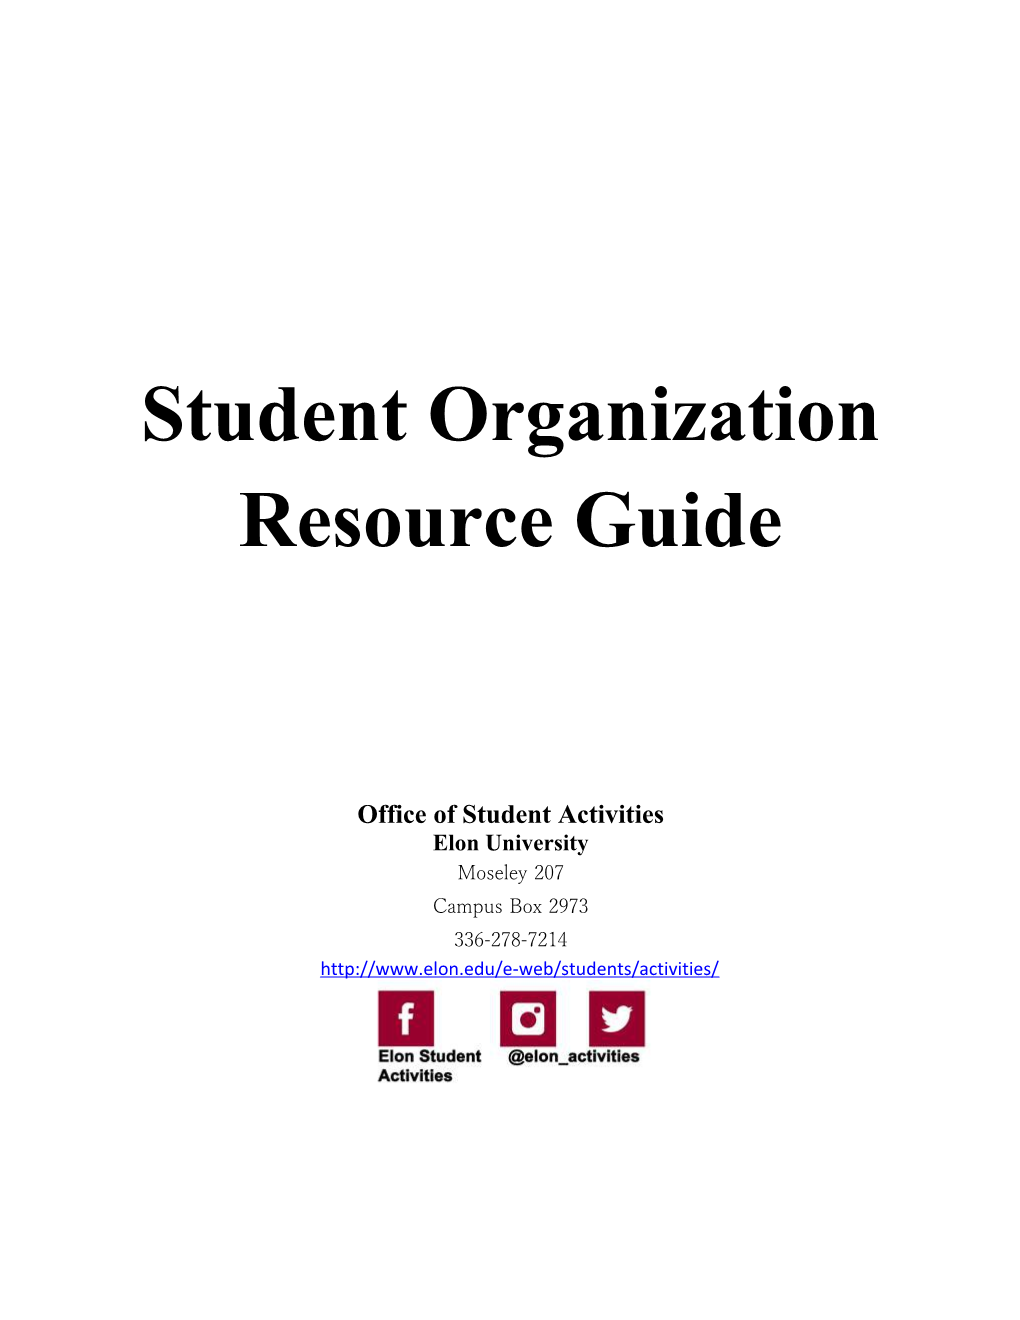 Student Organization Resource Guide